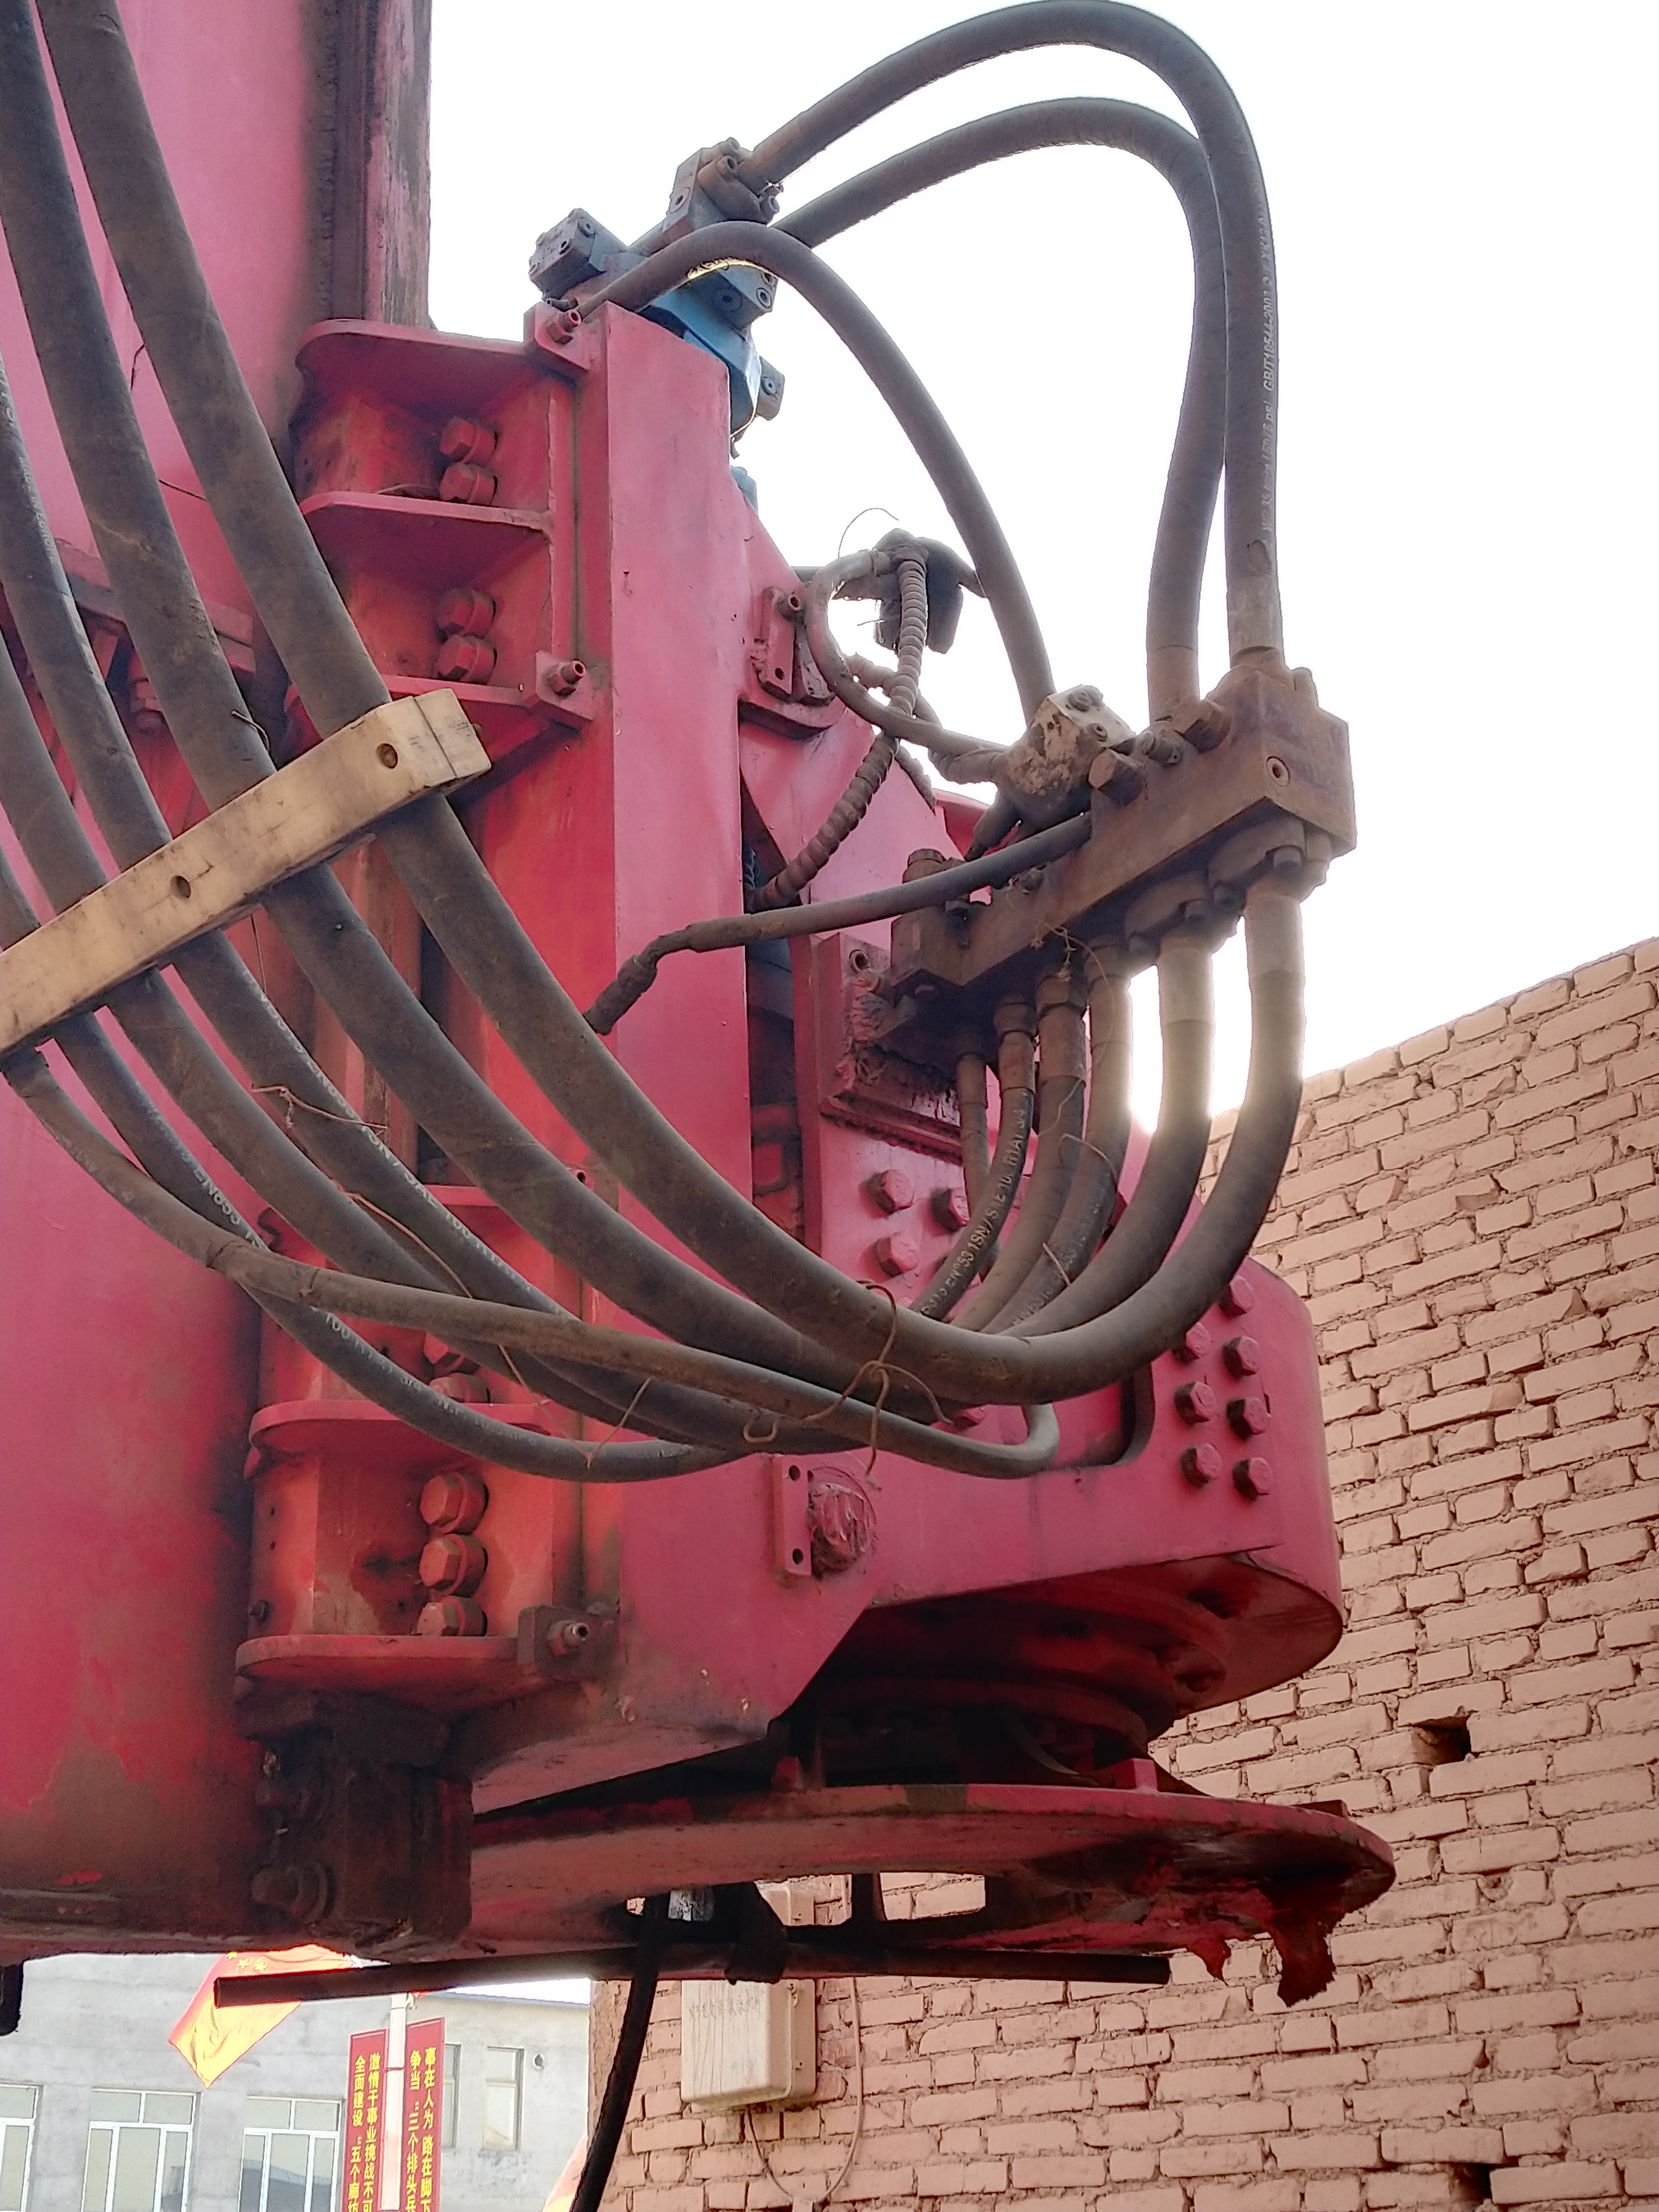 SANY SR220C rotary drilling rig